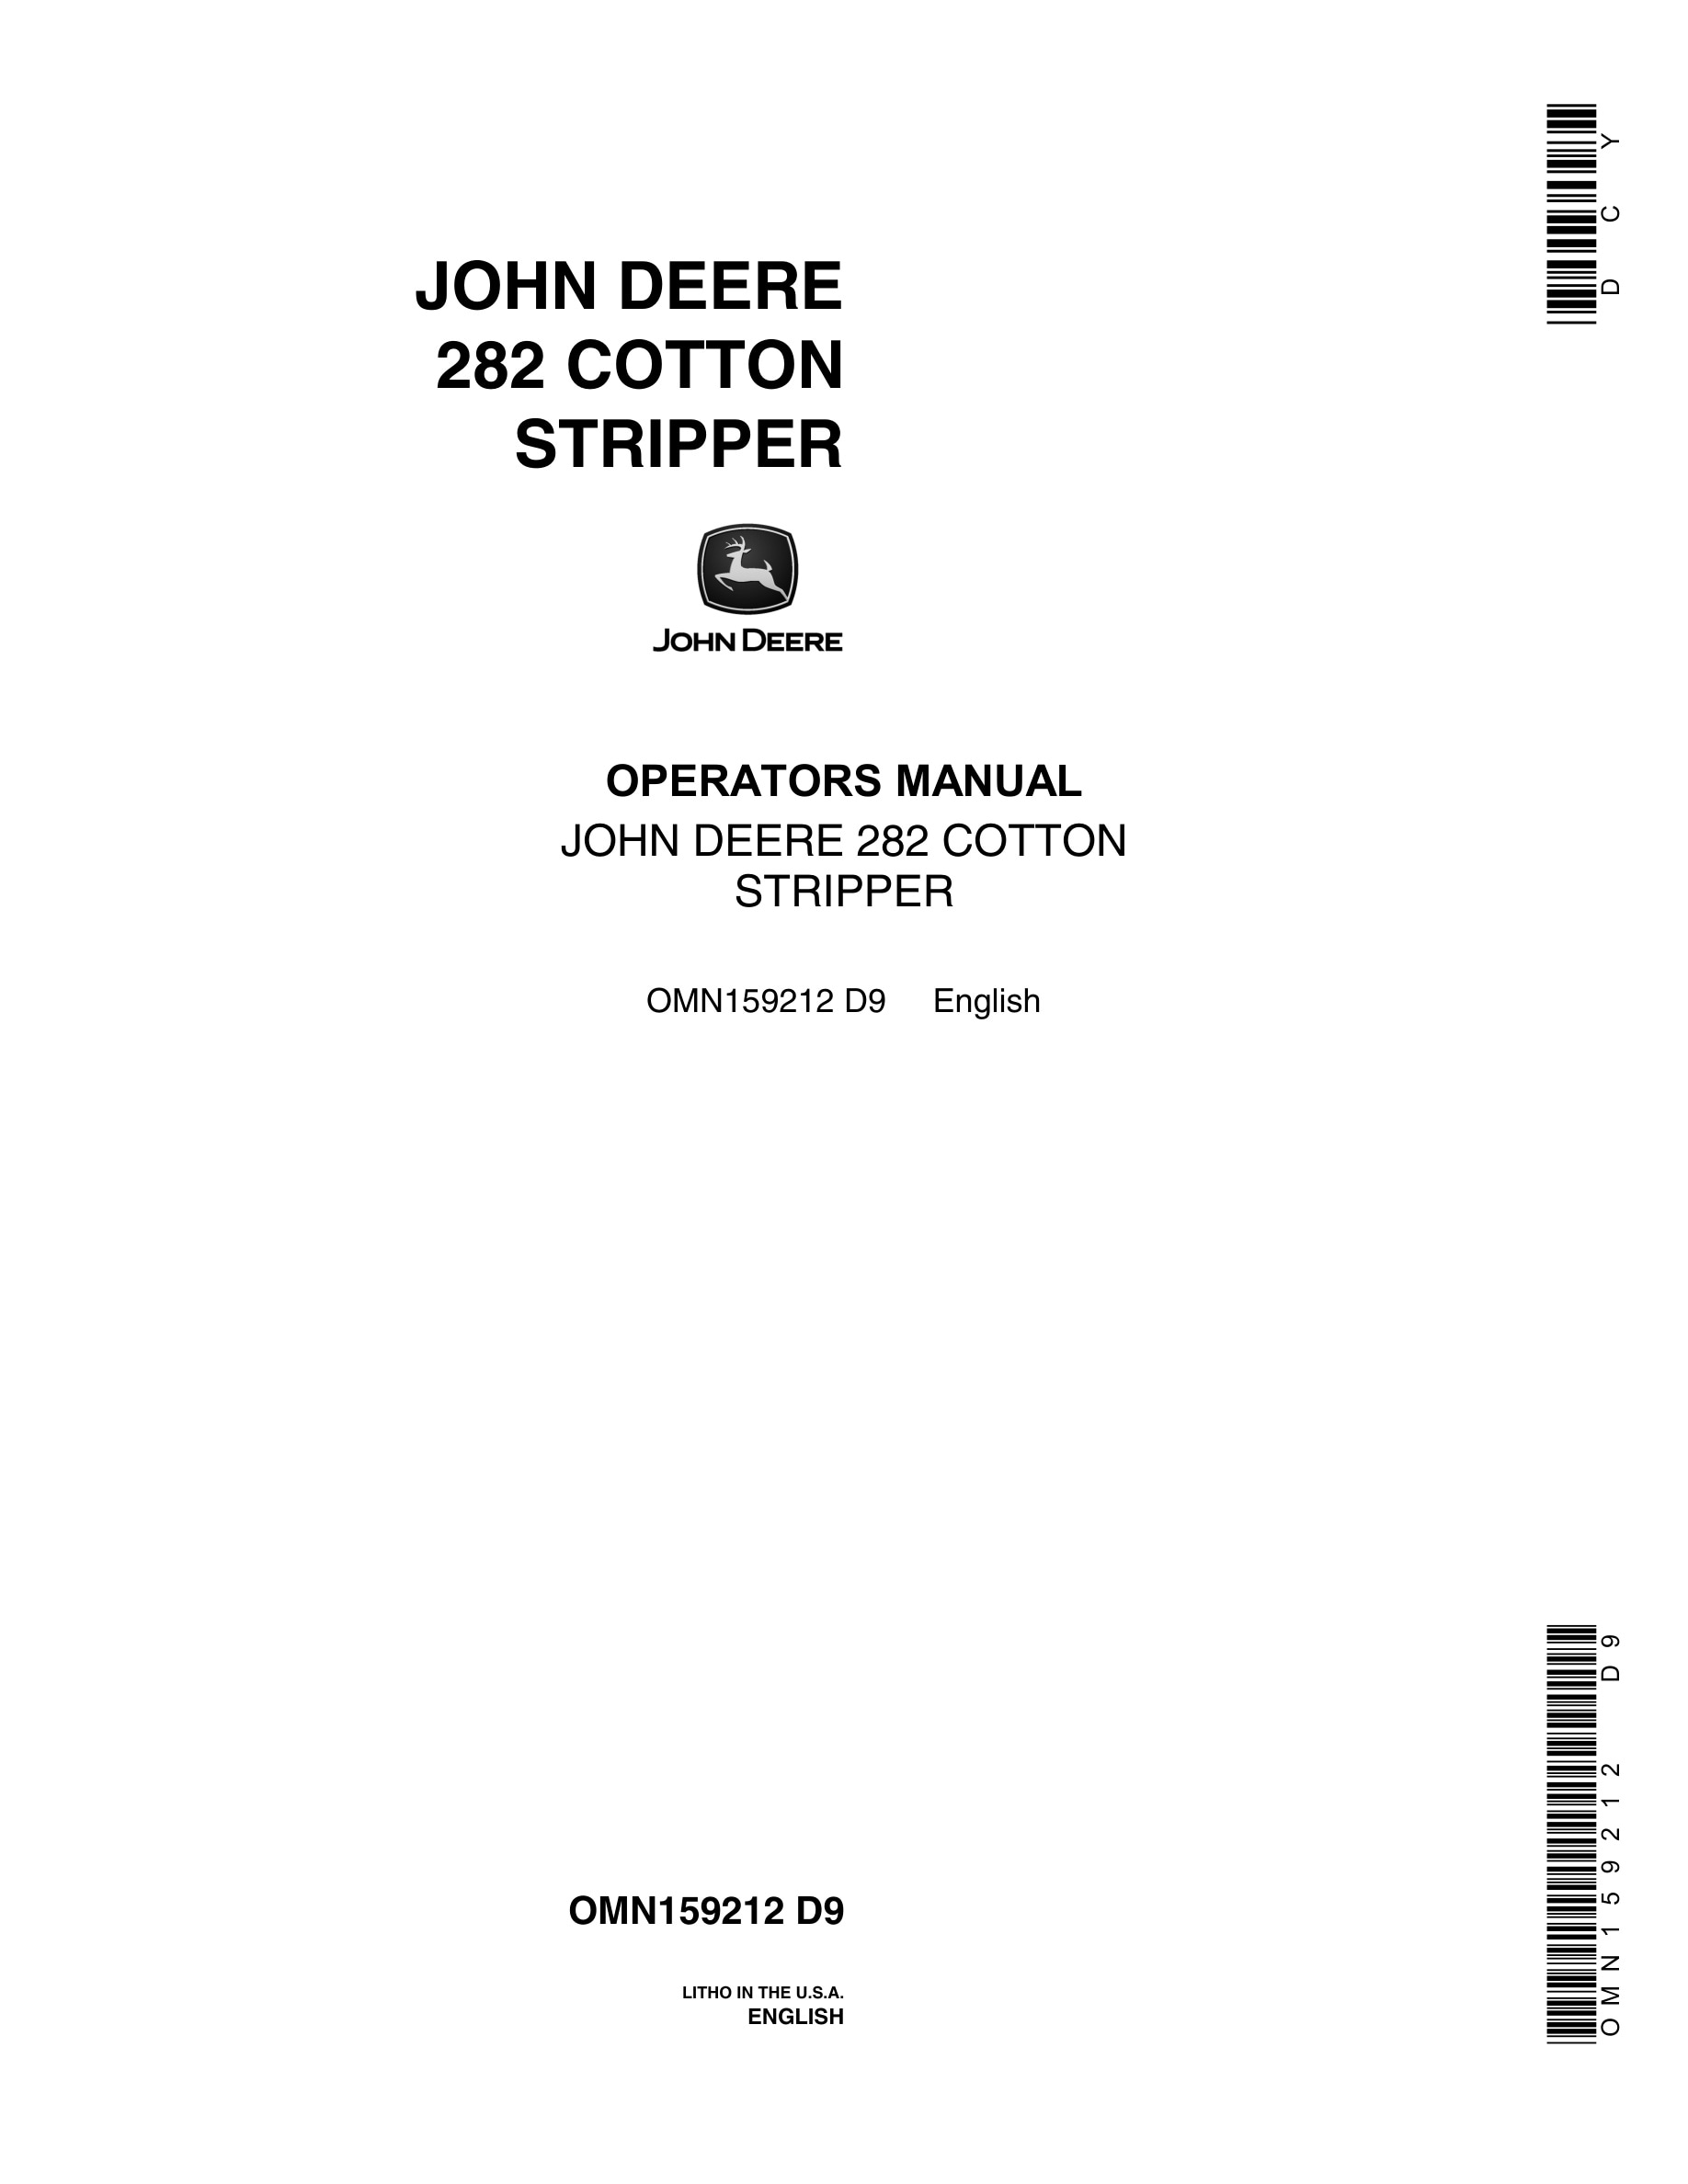 John Deere 282 Cotton Sripper Operator Manual OMN159212-1